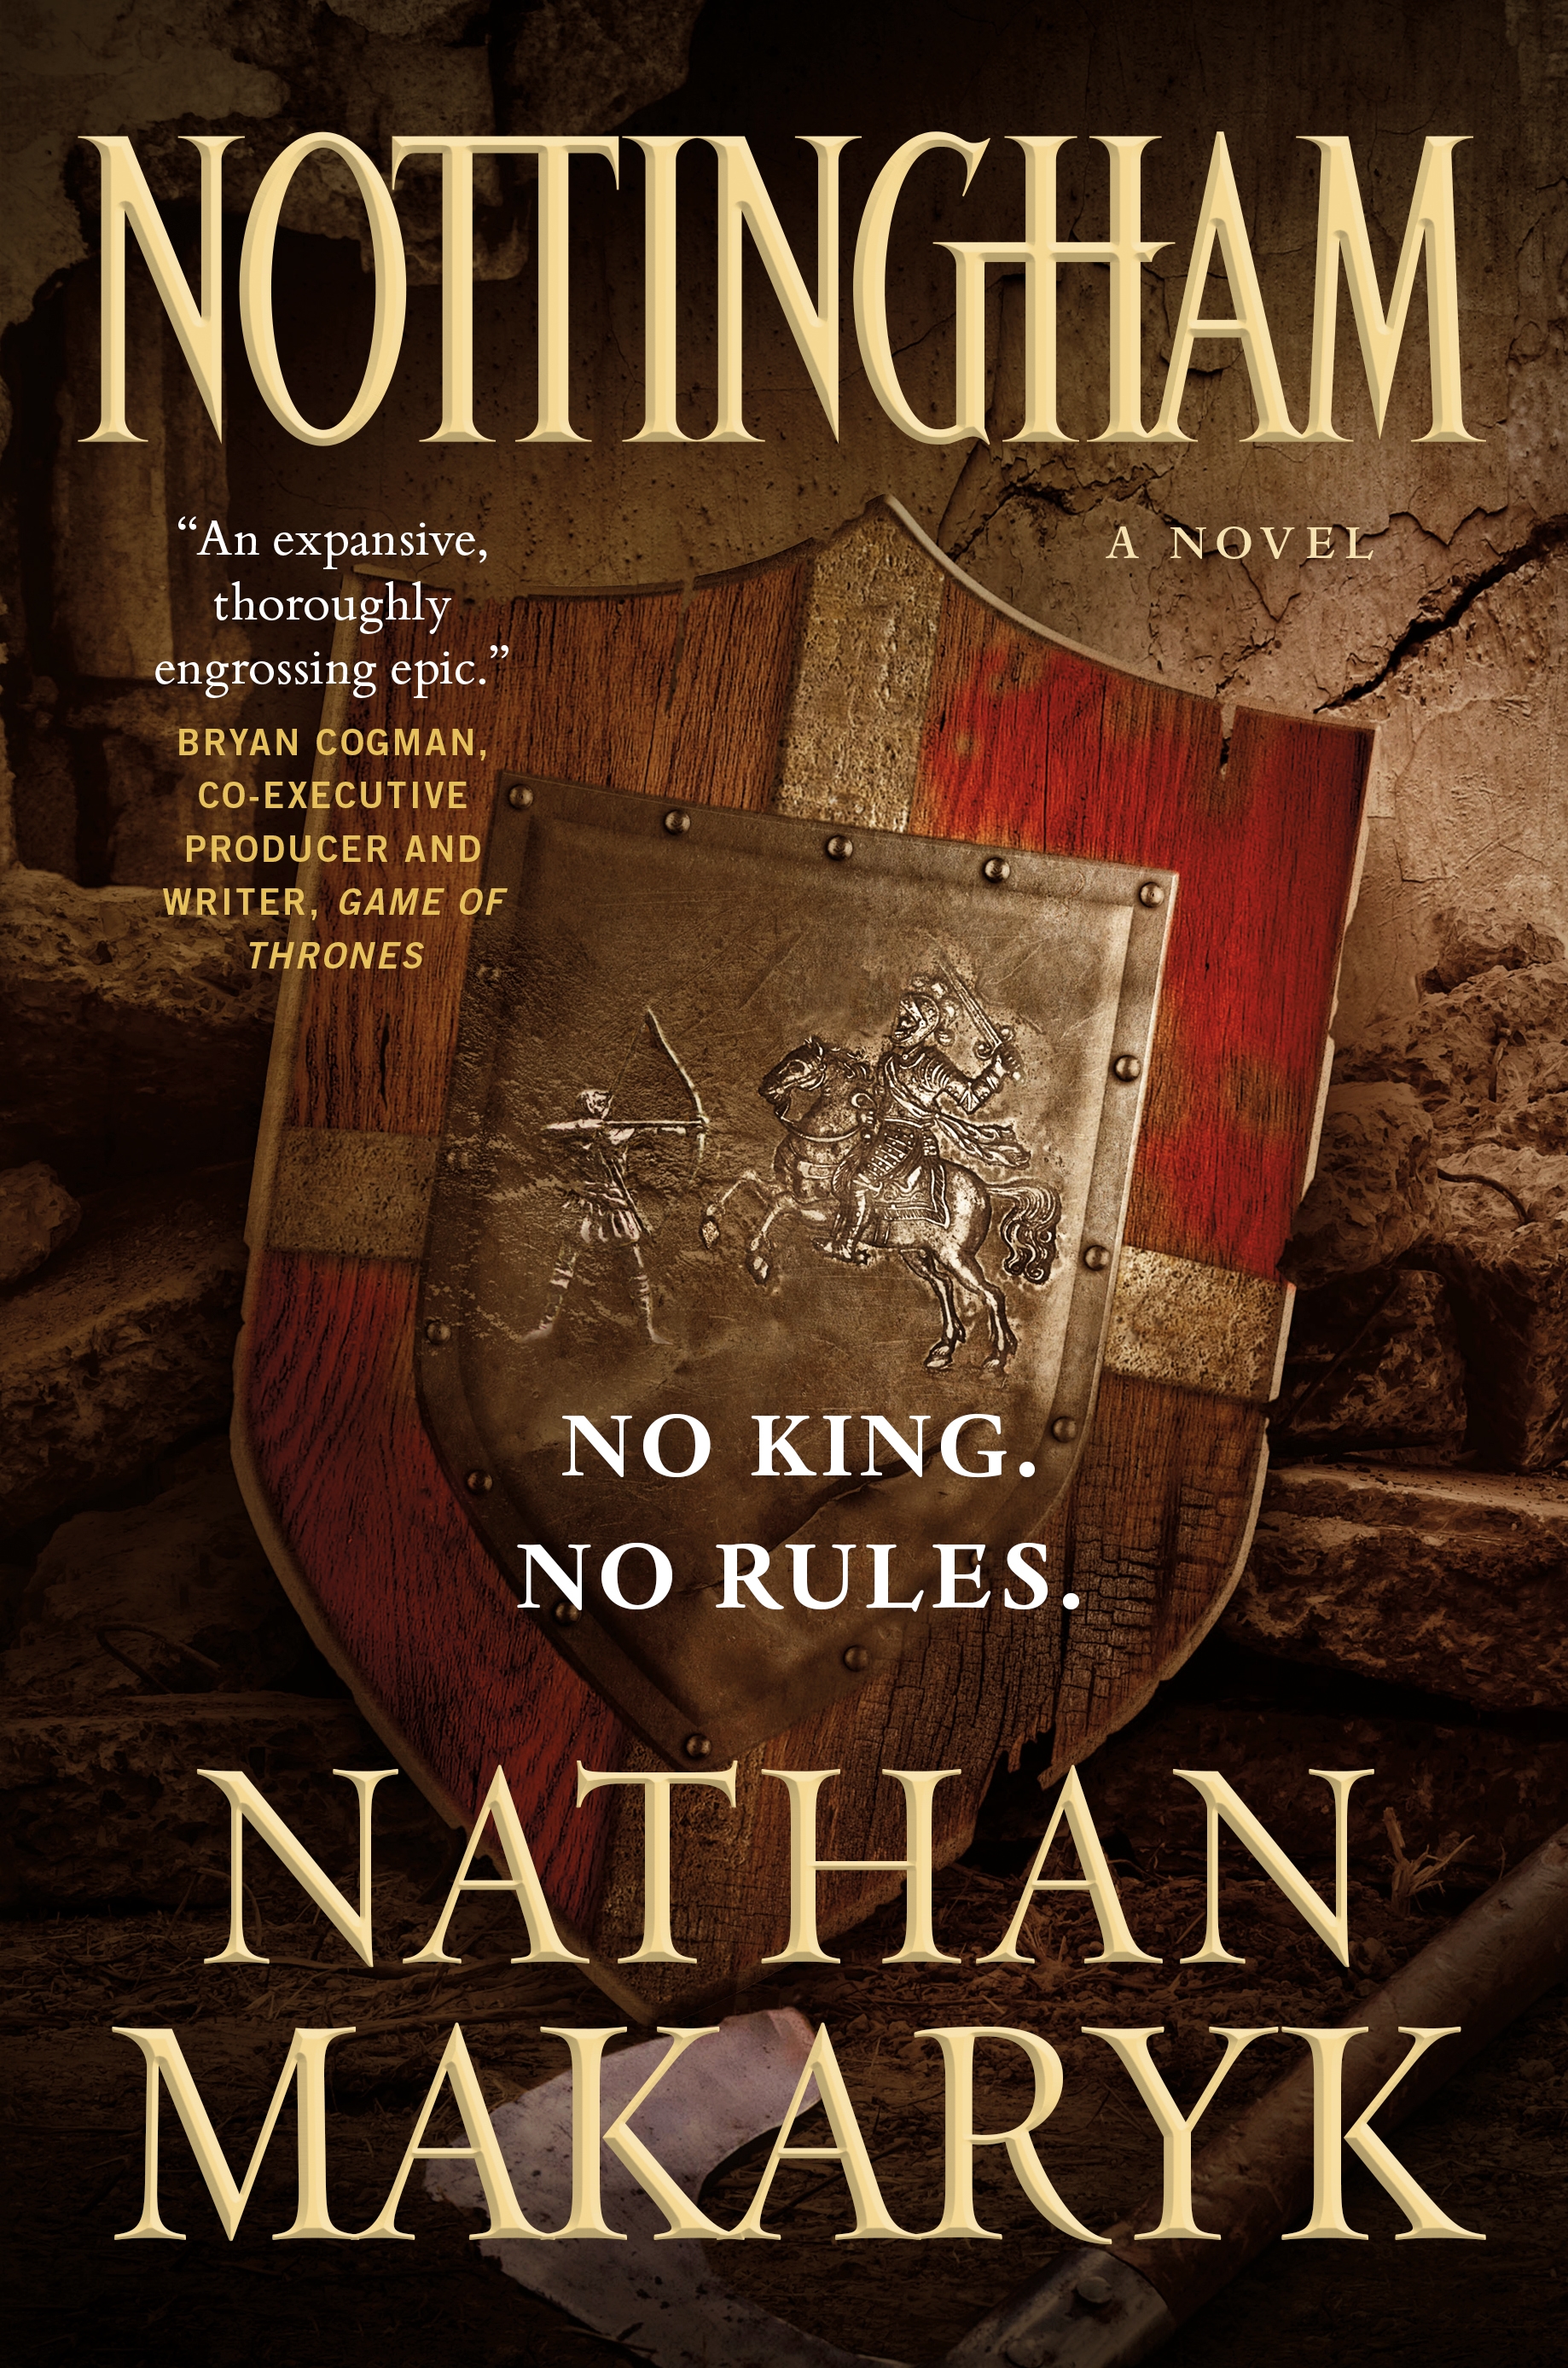 Nottingham : A Novel by Nathan Makaryk